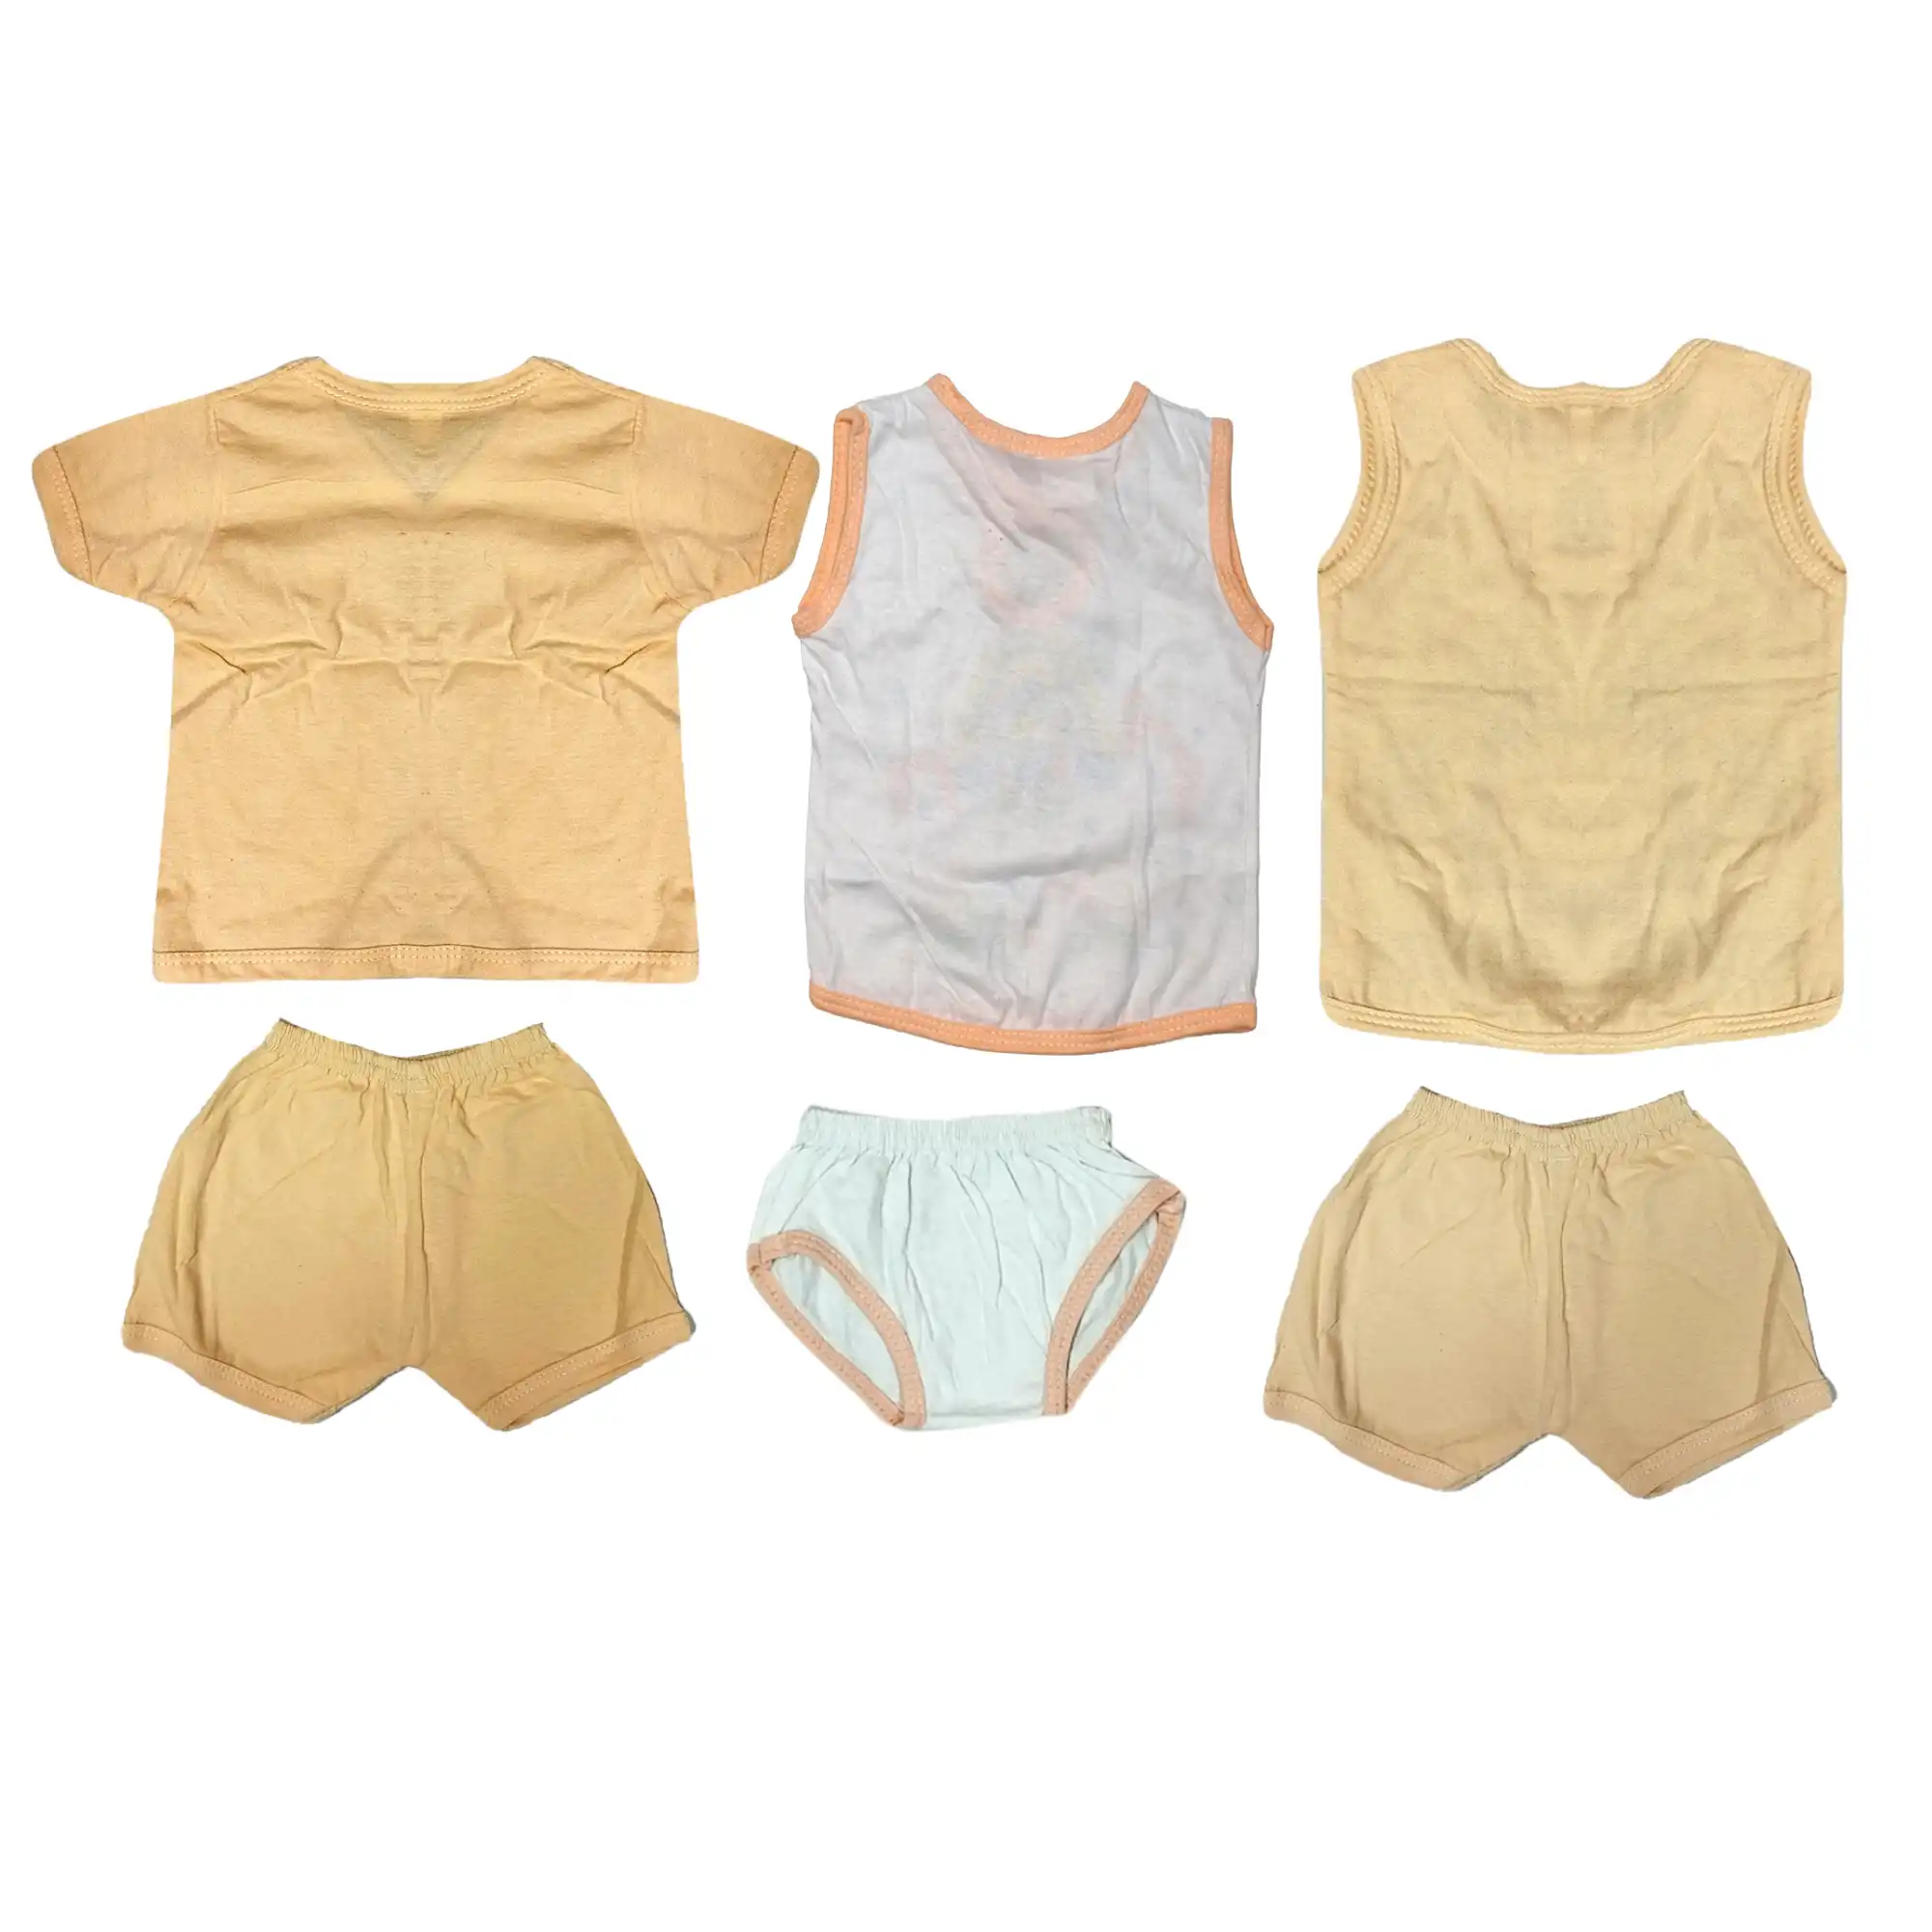 Newborn Baby Clothing Set of 3 Peach 2